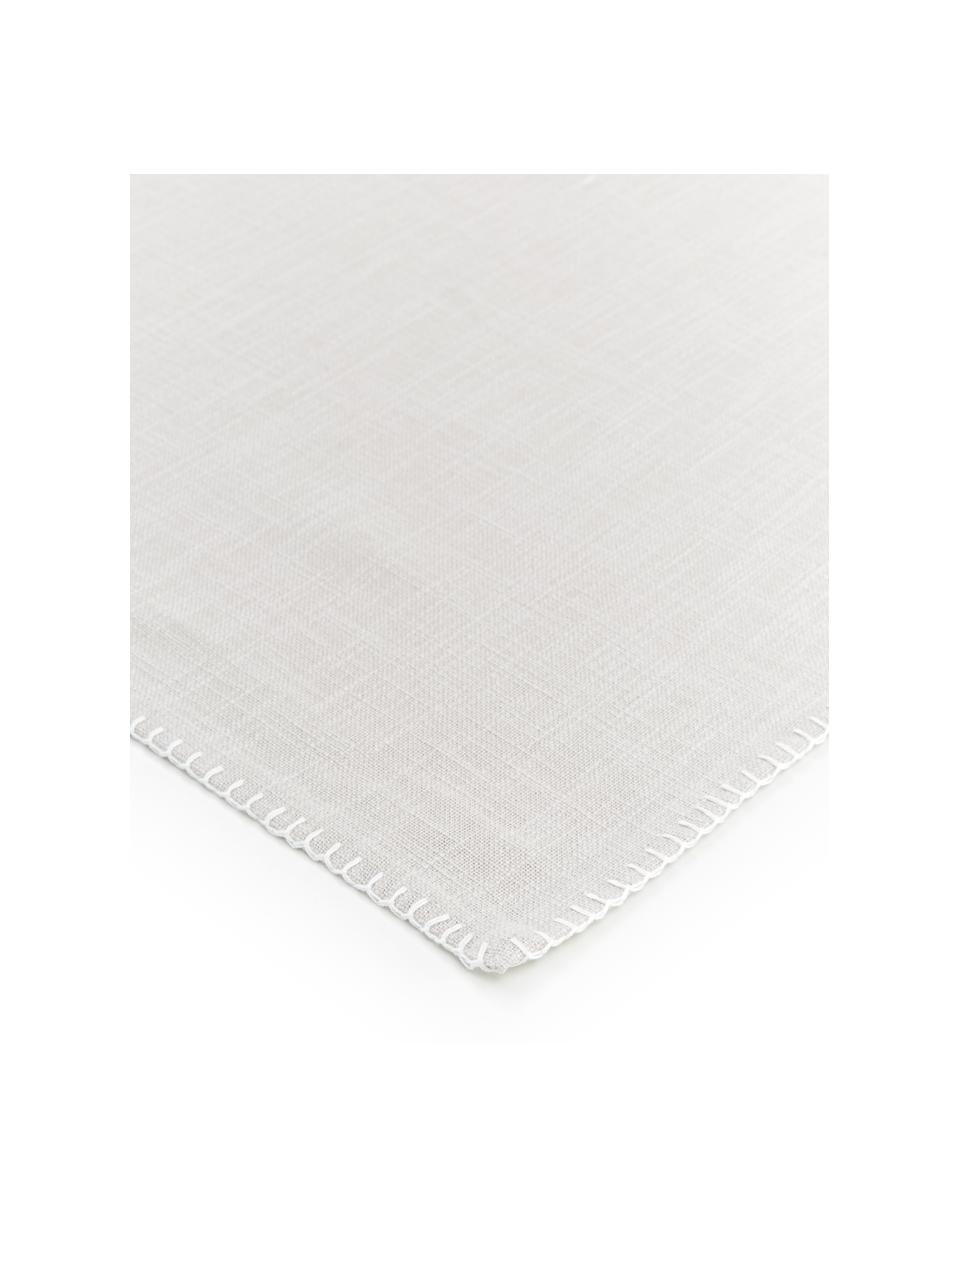 Baumwoll-Tischläufer Finca in Grau, Baumwolle, Grau, B 50 x L 160 cm